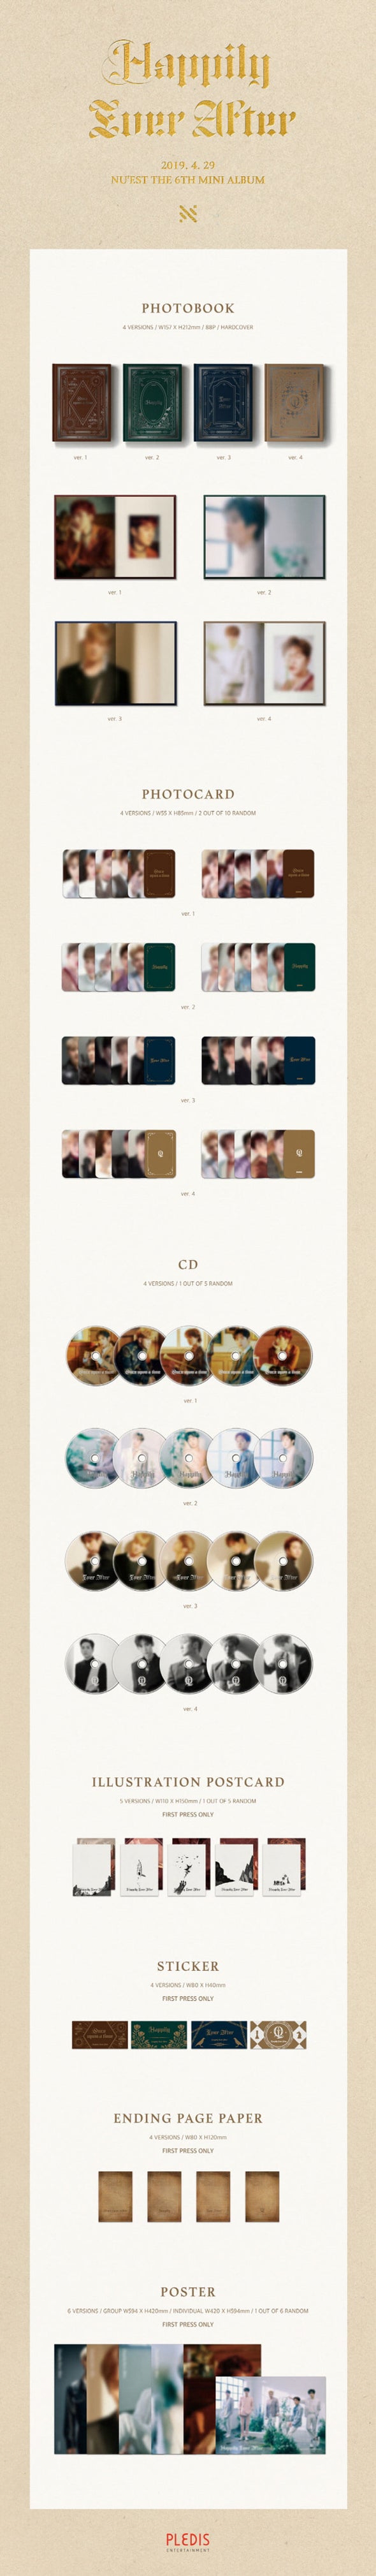 NU'EST - 6th Mini Album Happily Ever After